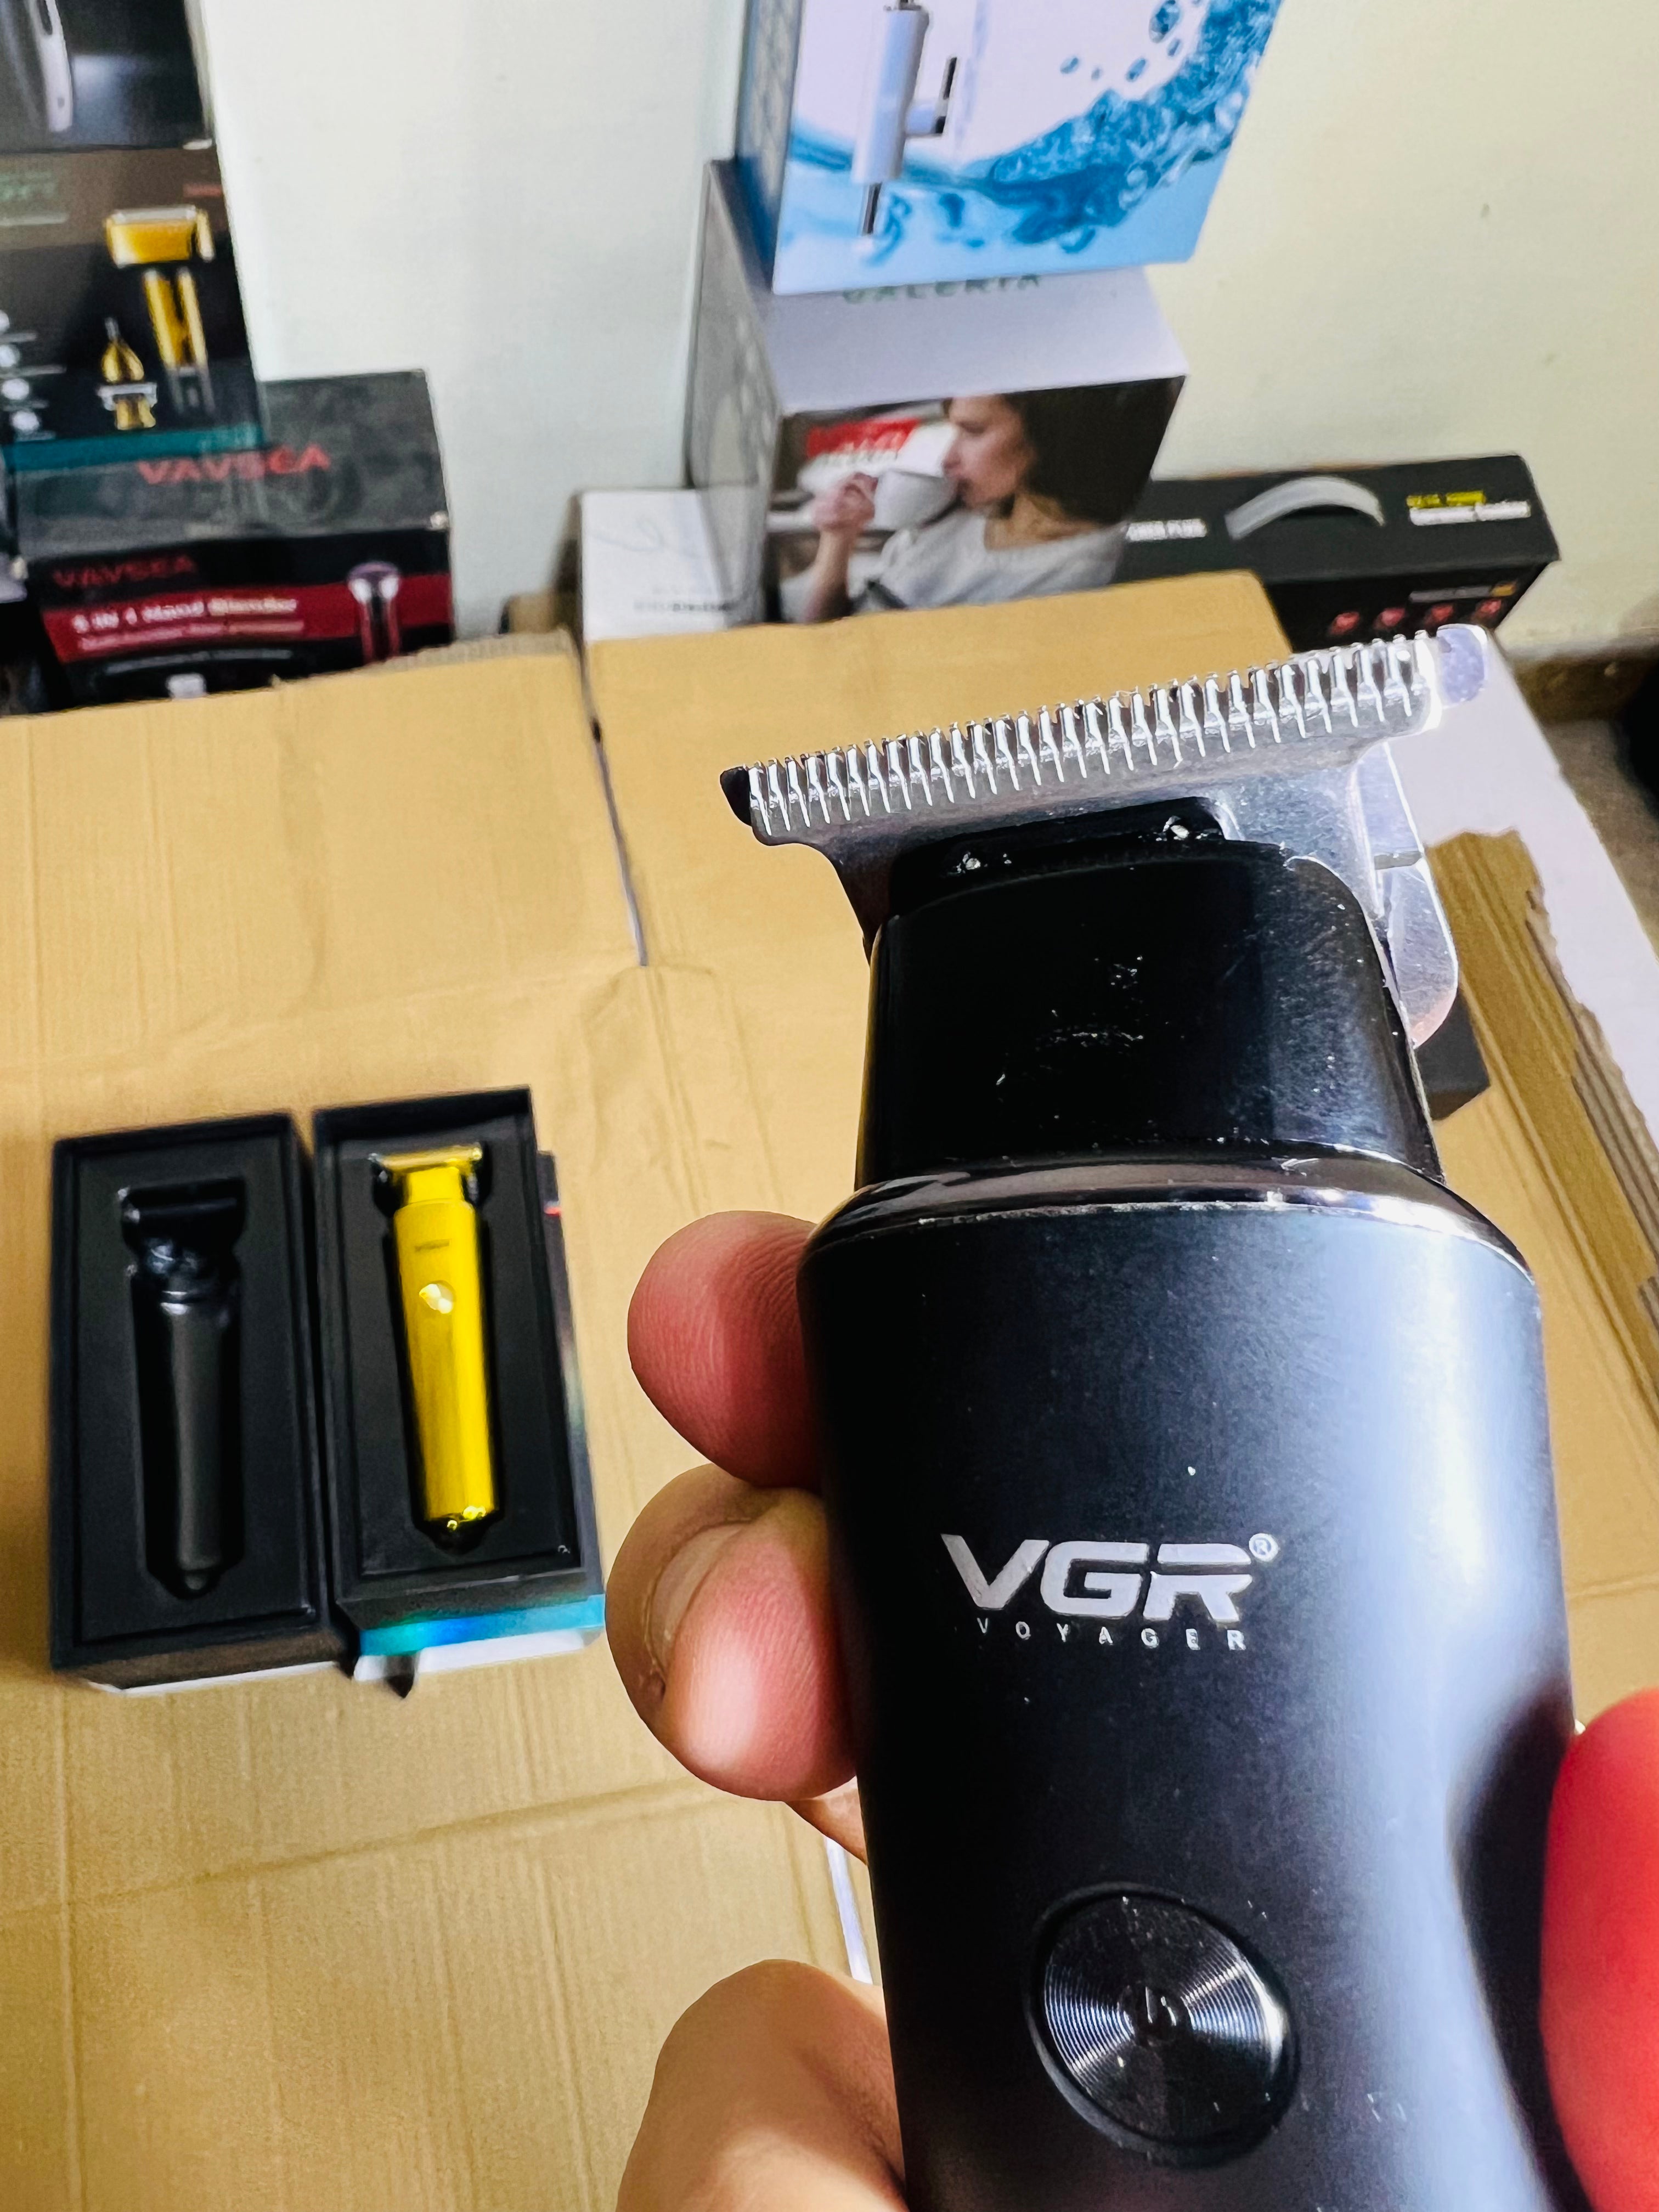 LOT imported VGR hair trimmer